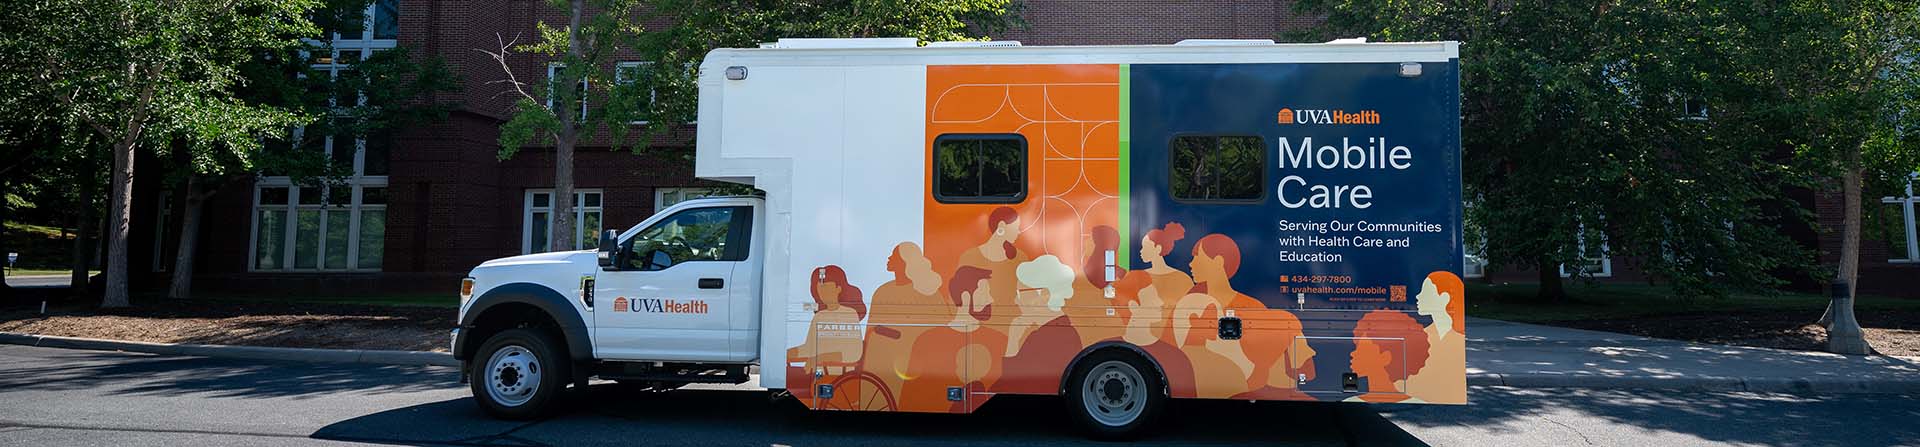 UVA Health Mobile Care van